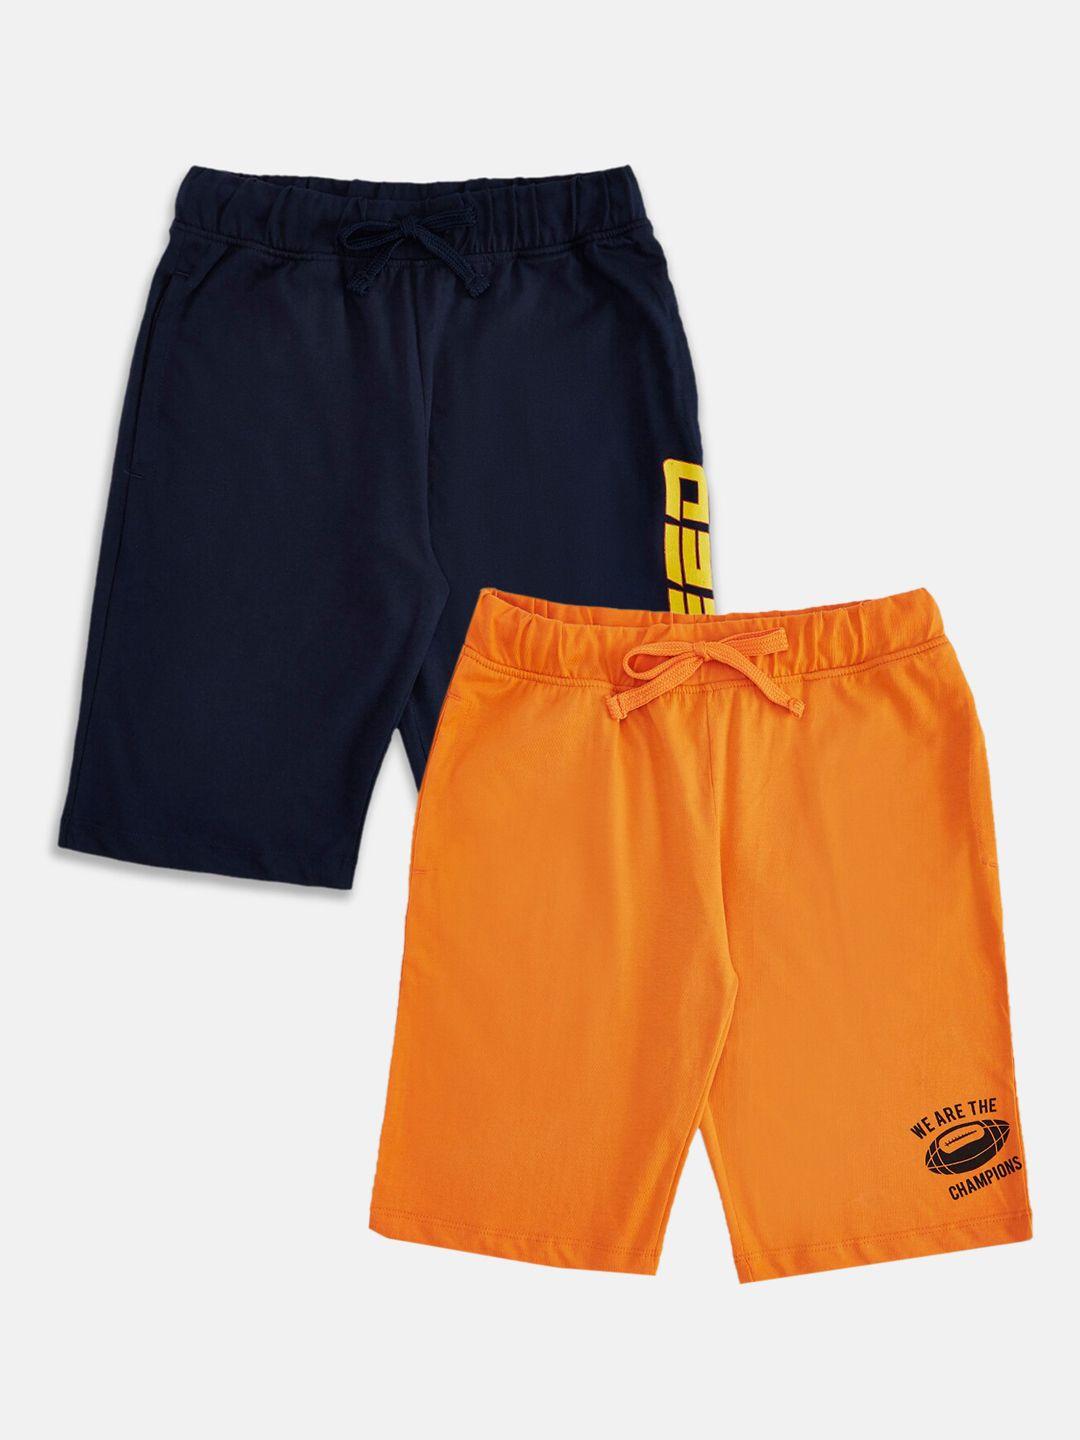 pantaloons junior boys orange & black shorts